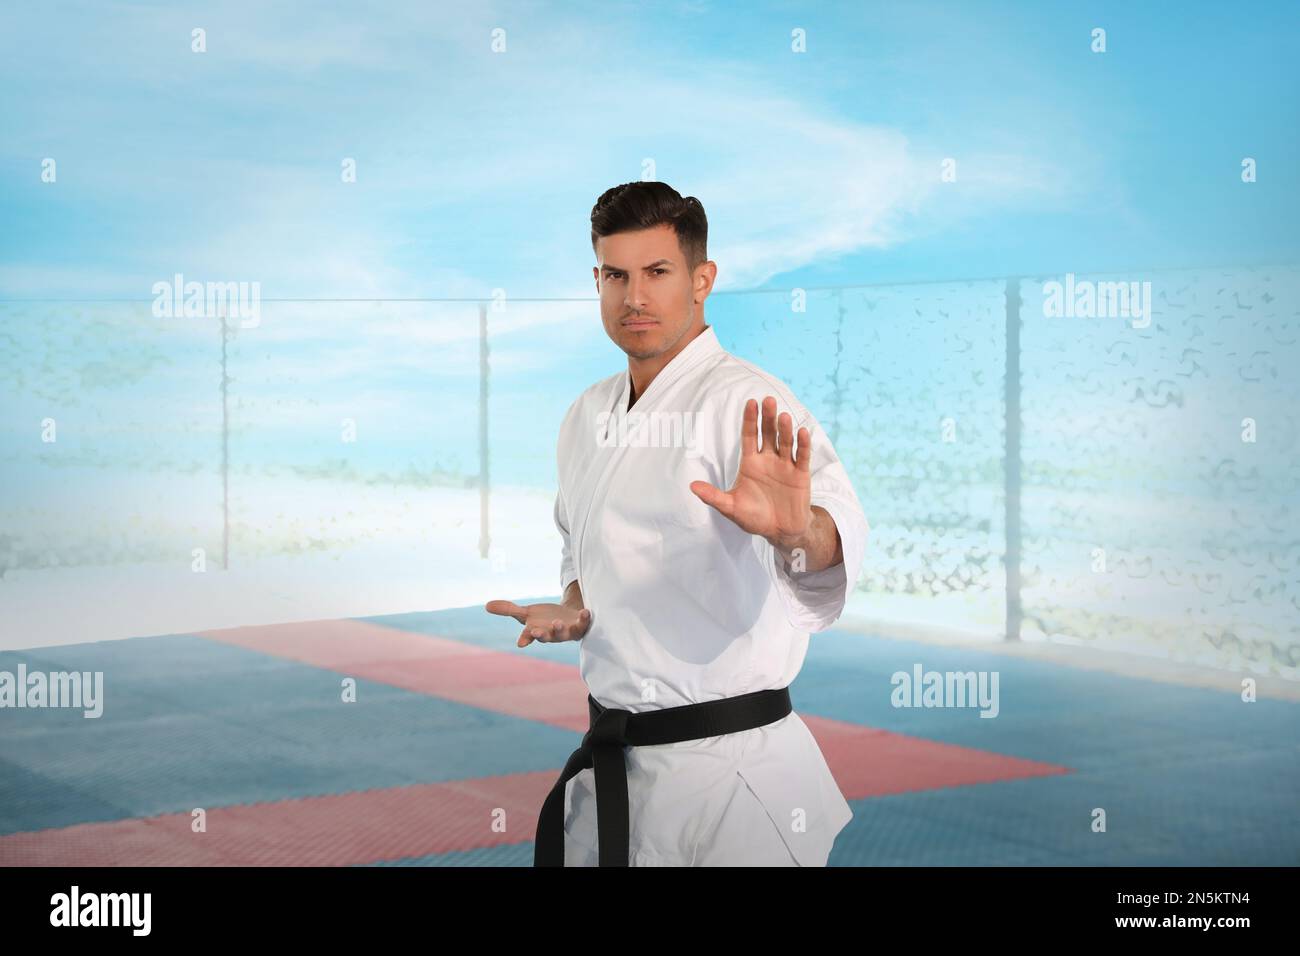 Mosse di karate immagini e fotografie stock ad alta risoluzione - Alamy